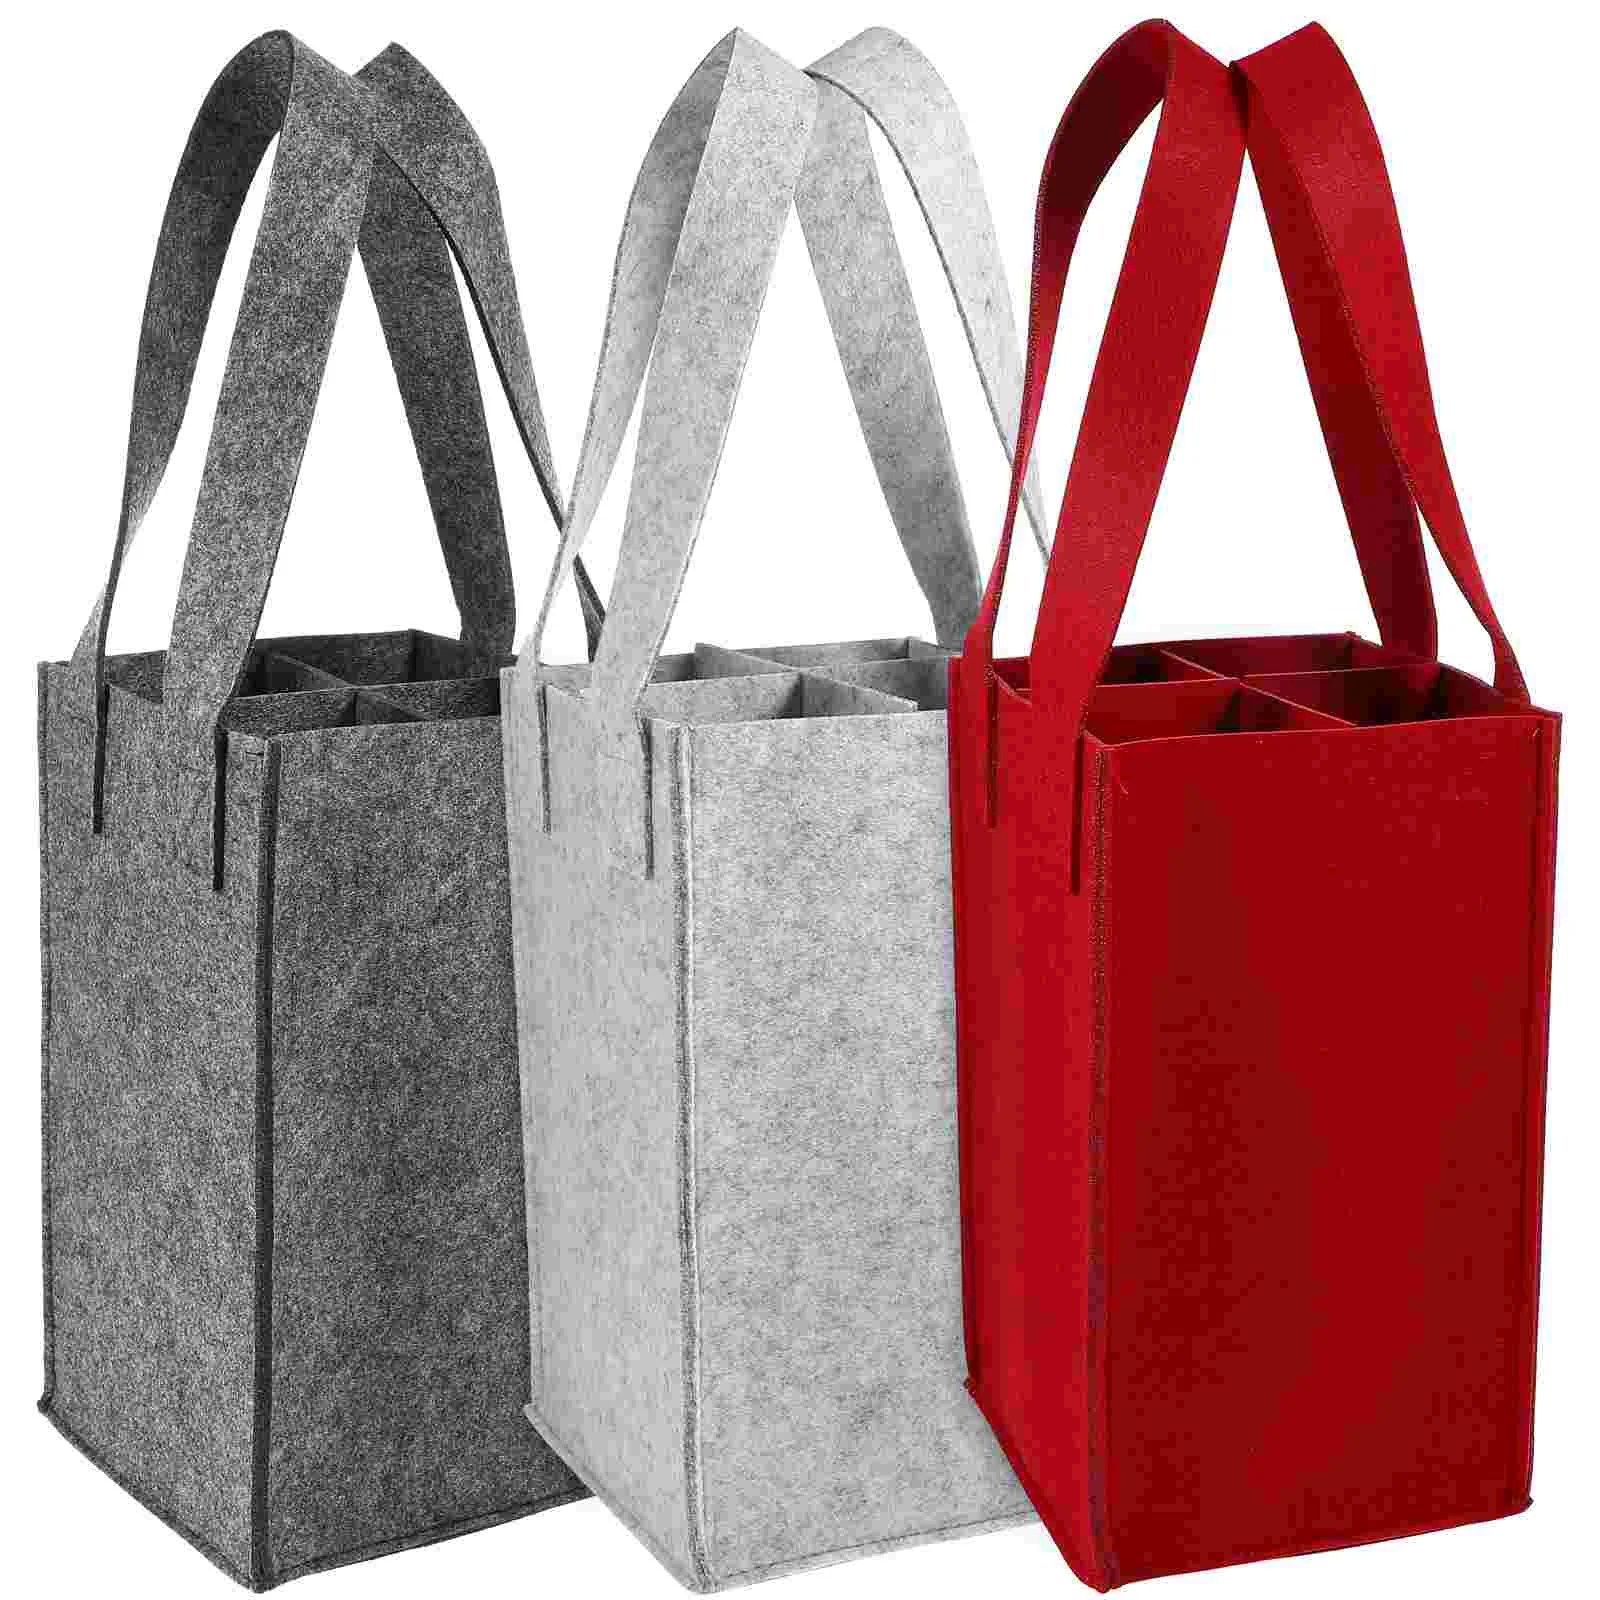 

3 Pcs Bag Foldable Shopping Picnic Bags Large Capacity Carrier Suitcase Picnics Felt Travel Tote Divider Bottles